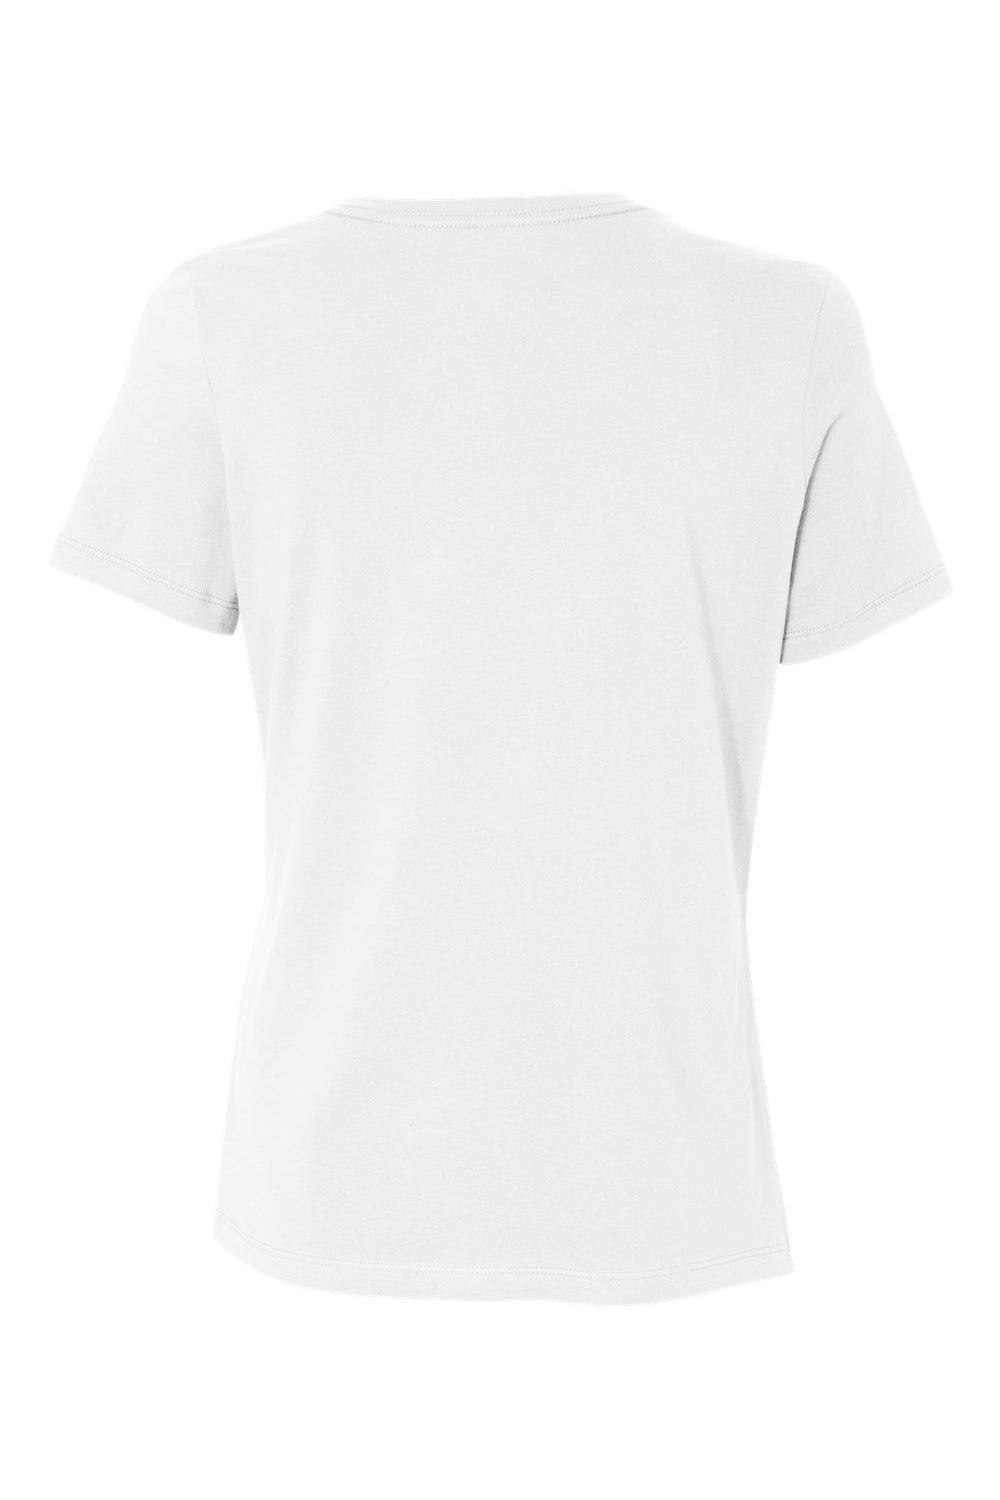 Bella + Canvas BC6400/B6400/6400 Womens Relaxed Jersey Short Sleeve Crewneck T-Shirt White Flat Back